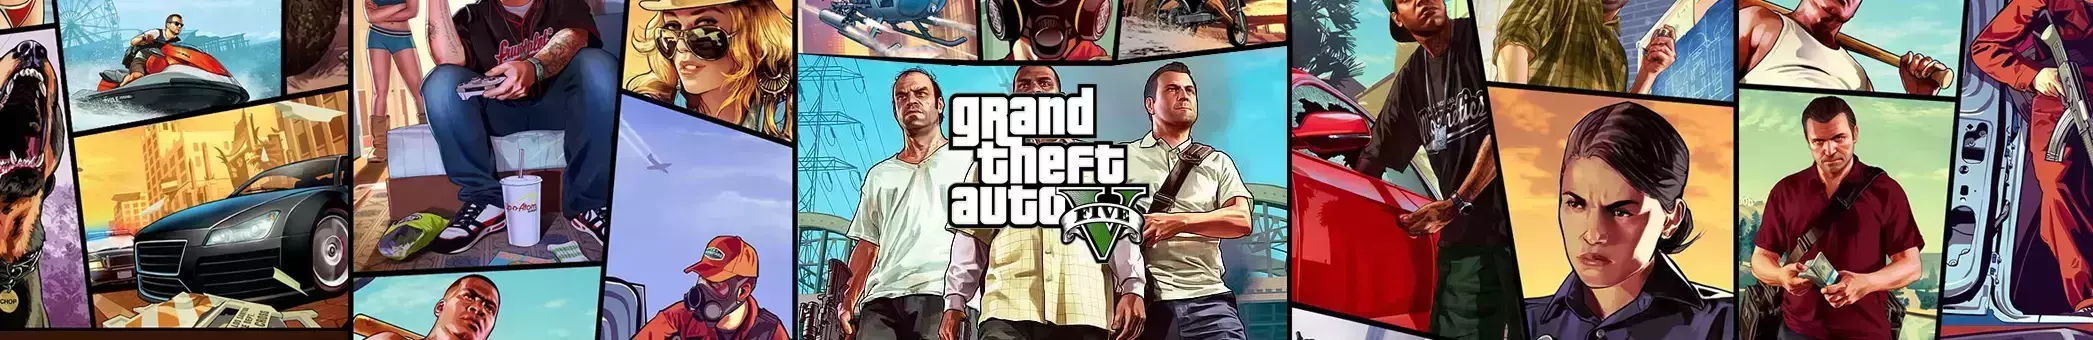 Grand Theft Auto Digital Edition